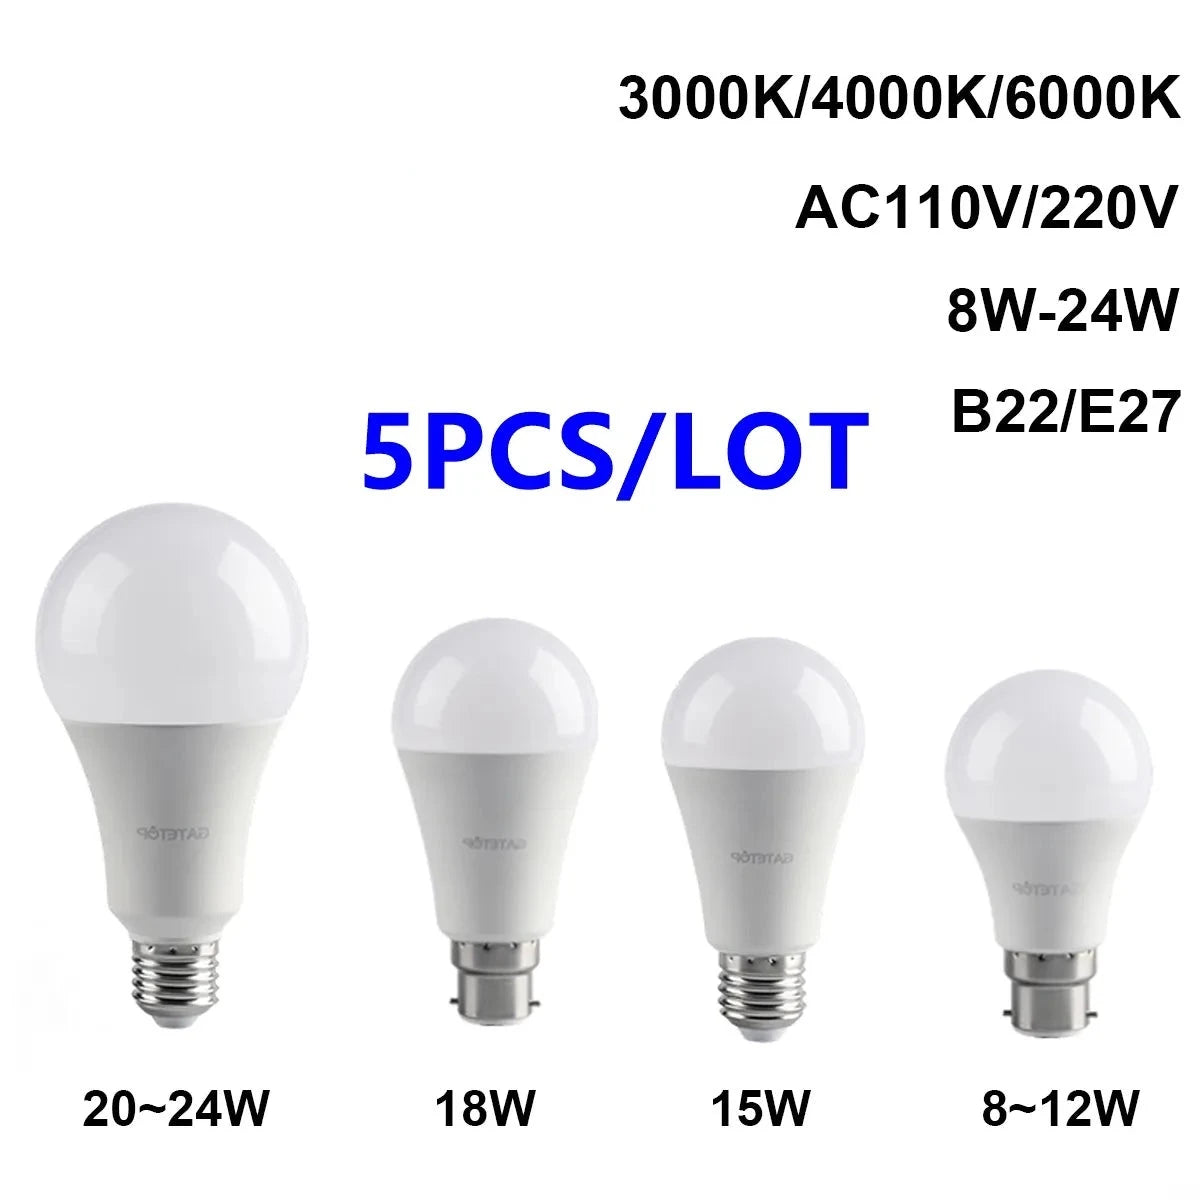 5PCS/LOT New LED bulb 8W-24W AC110V 220V high brightness warm white light E27 B22 in 2023 is suitable for study bedroom lighting